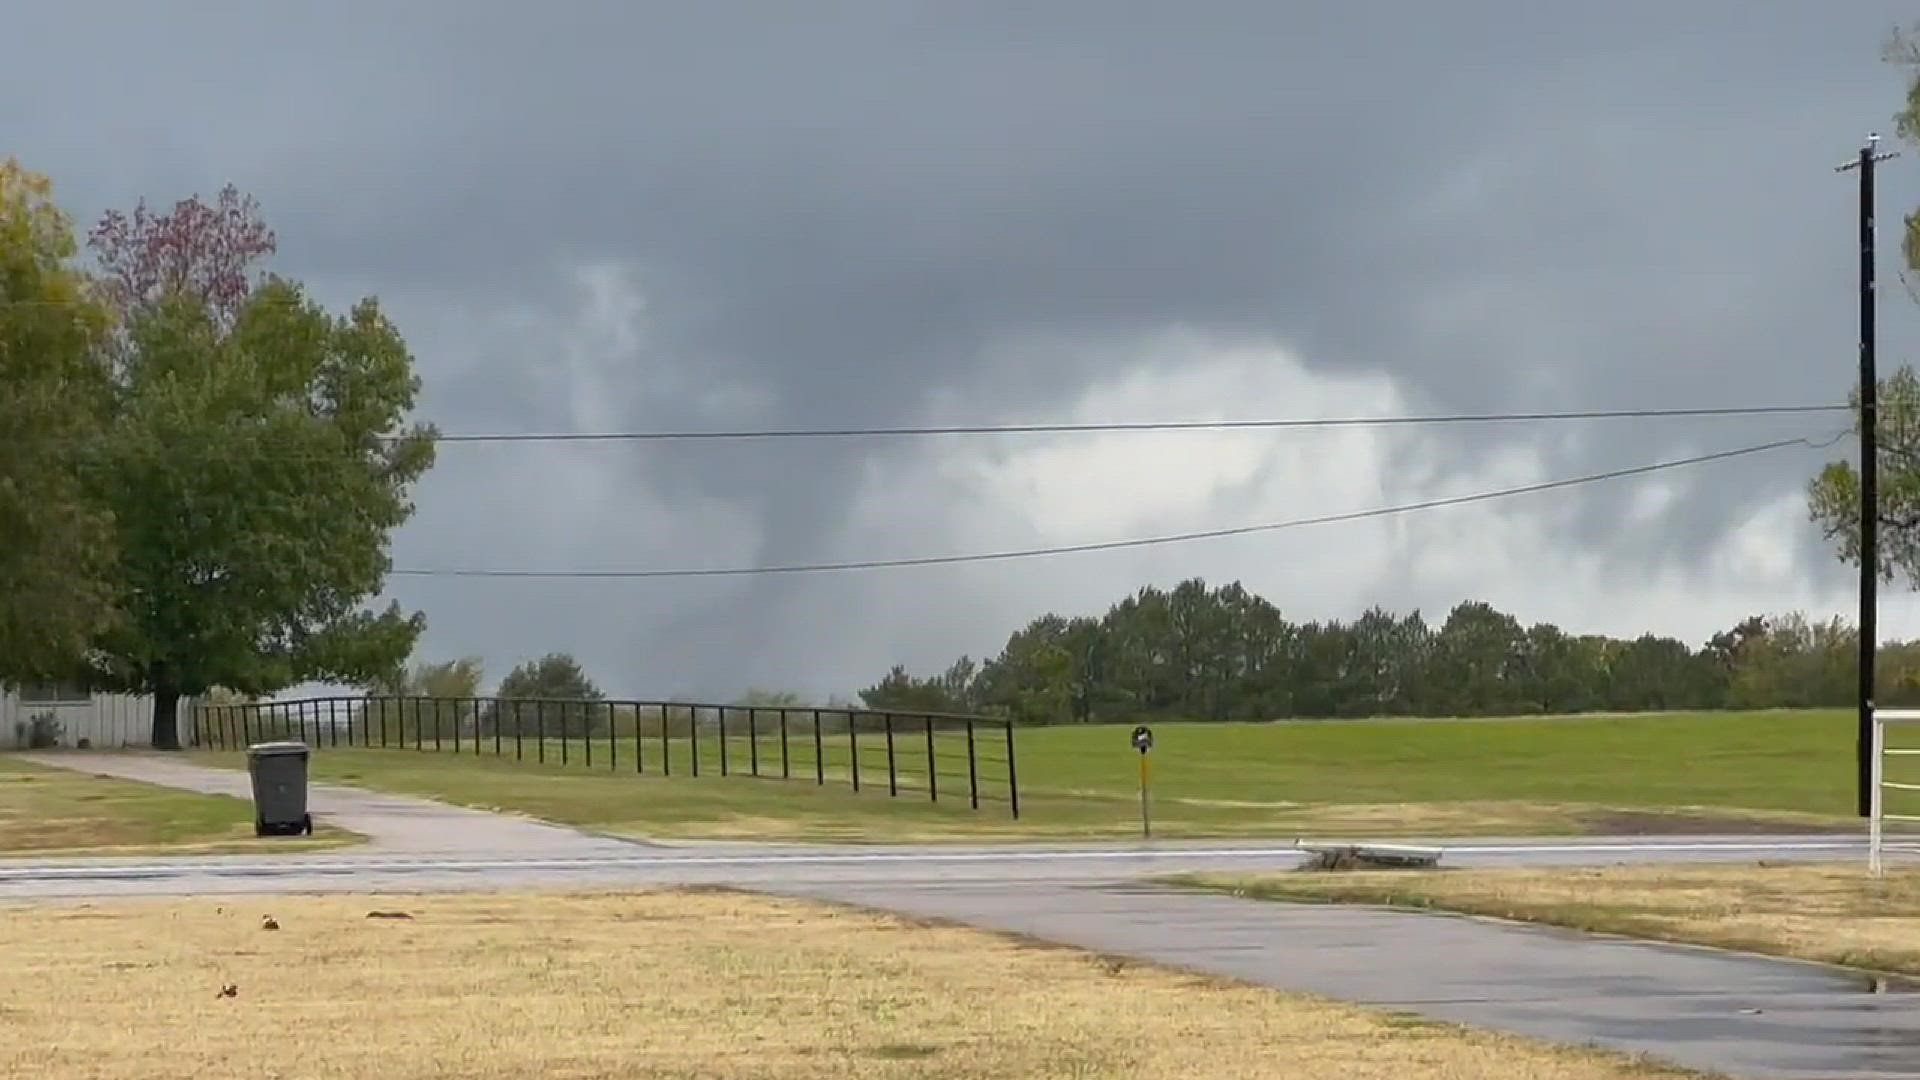 Richard Graves caught video of the Sulphur Springs tornado.